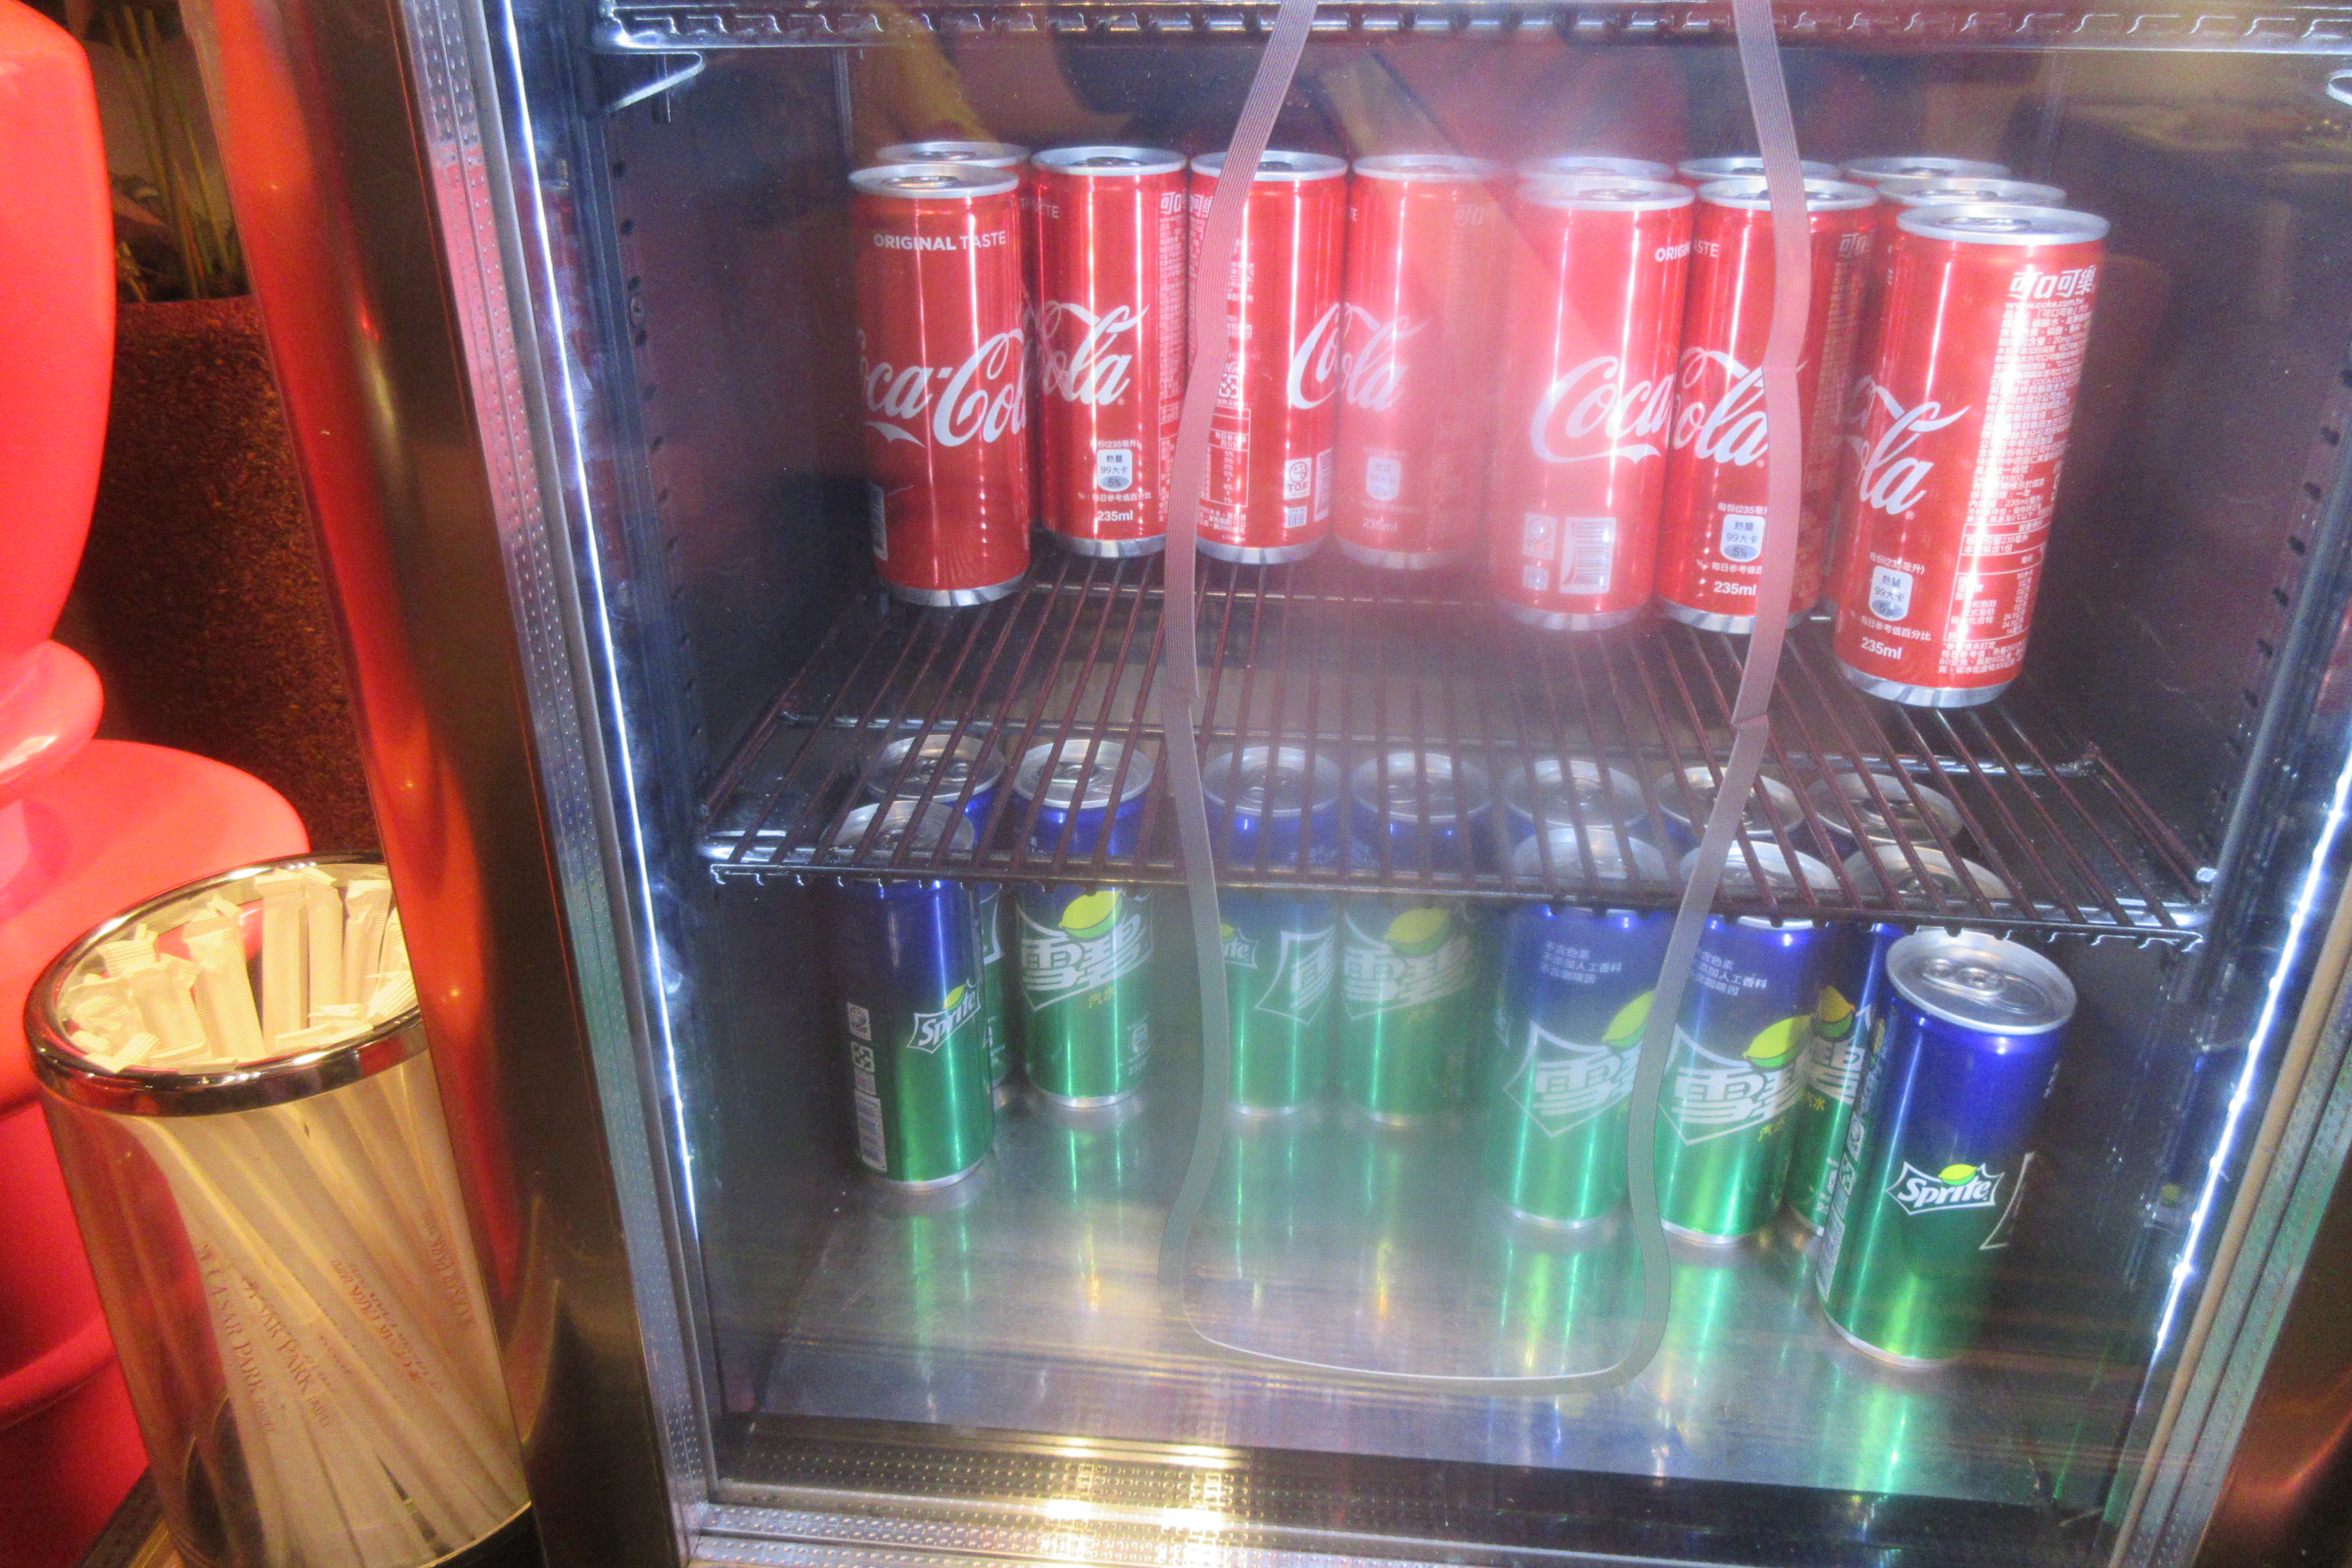 File:Coca Cola Can Glass.jpg - Wikimedia Commons